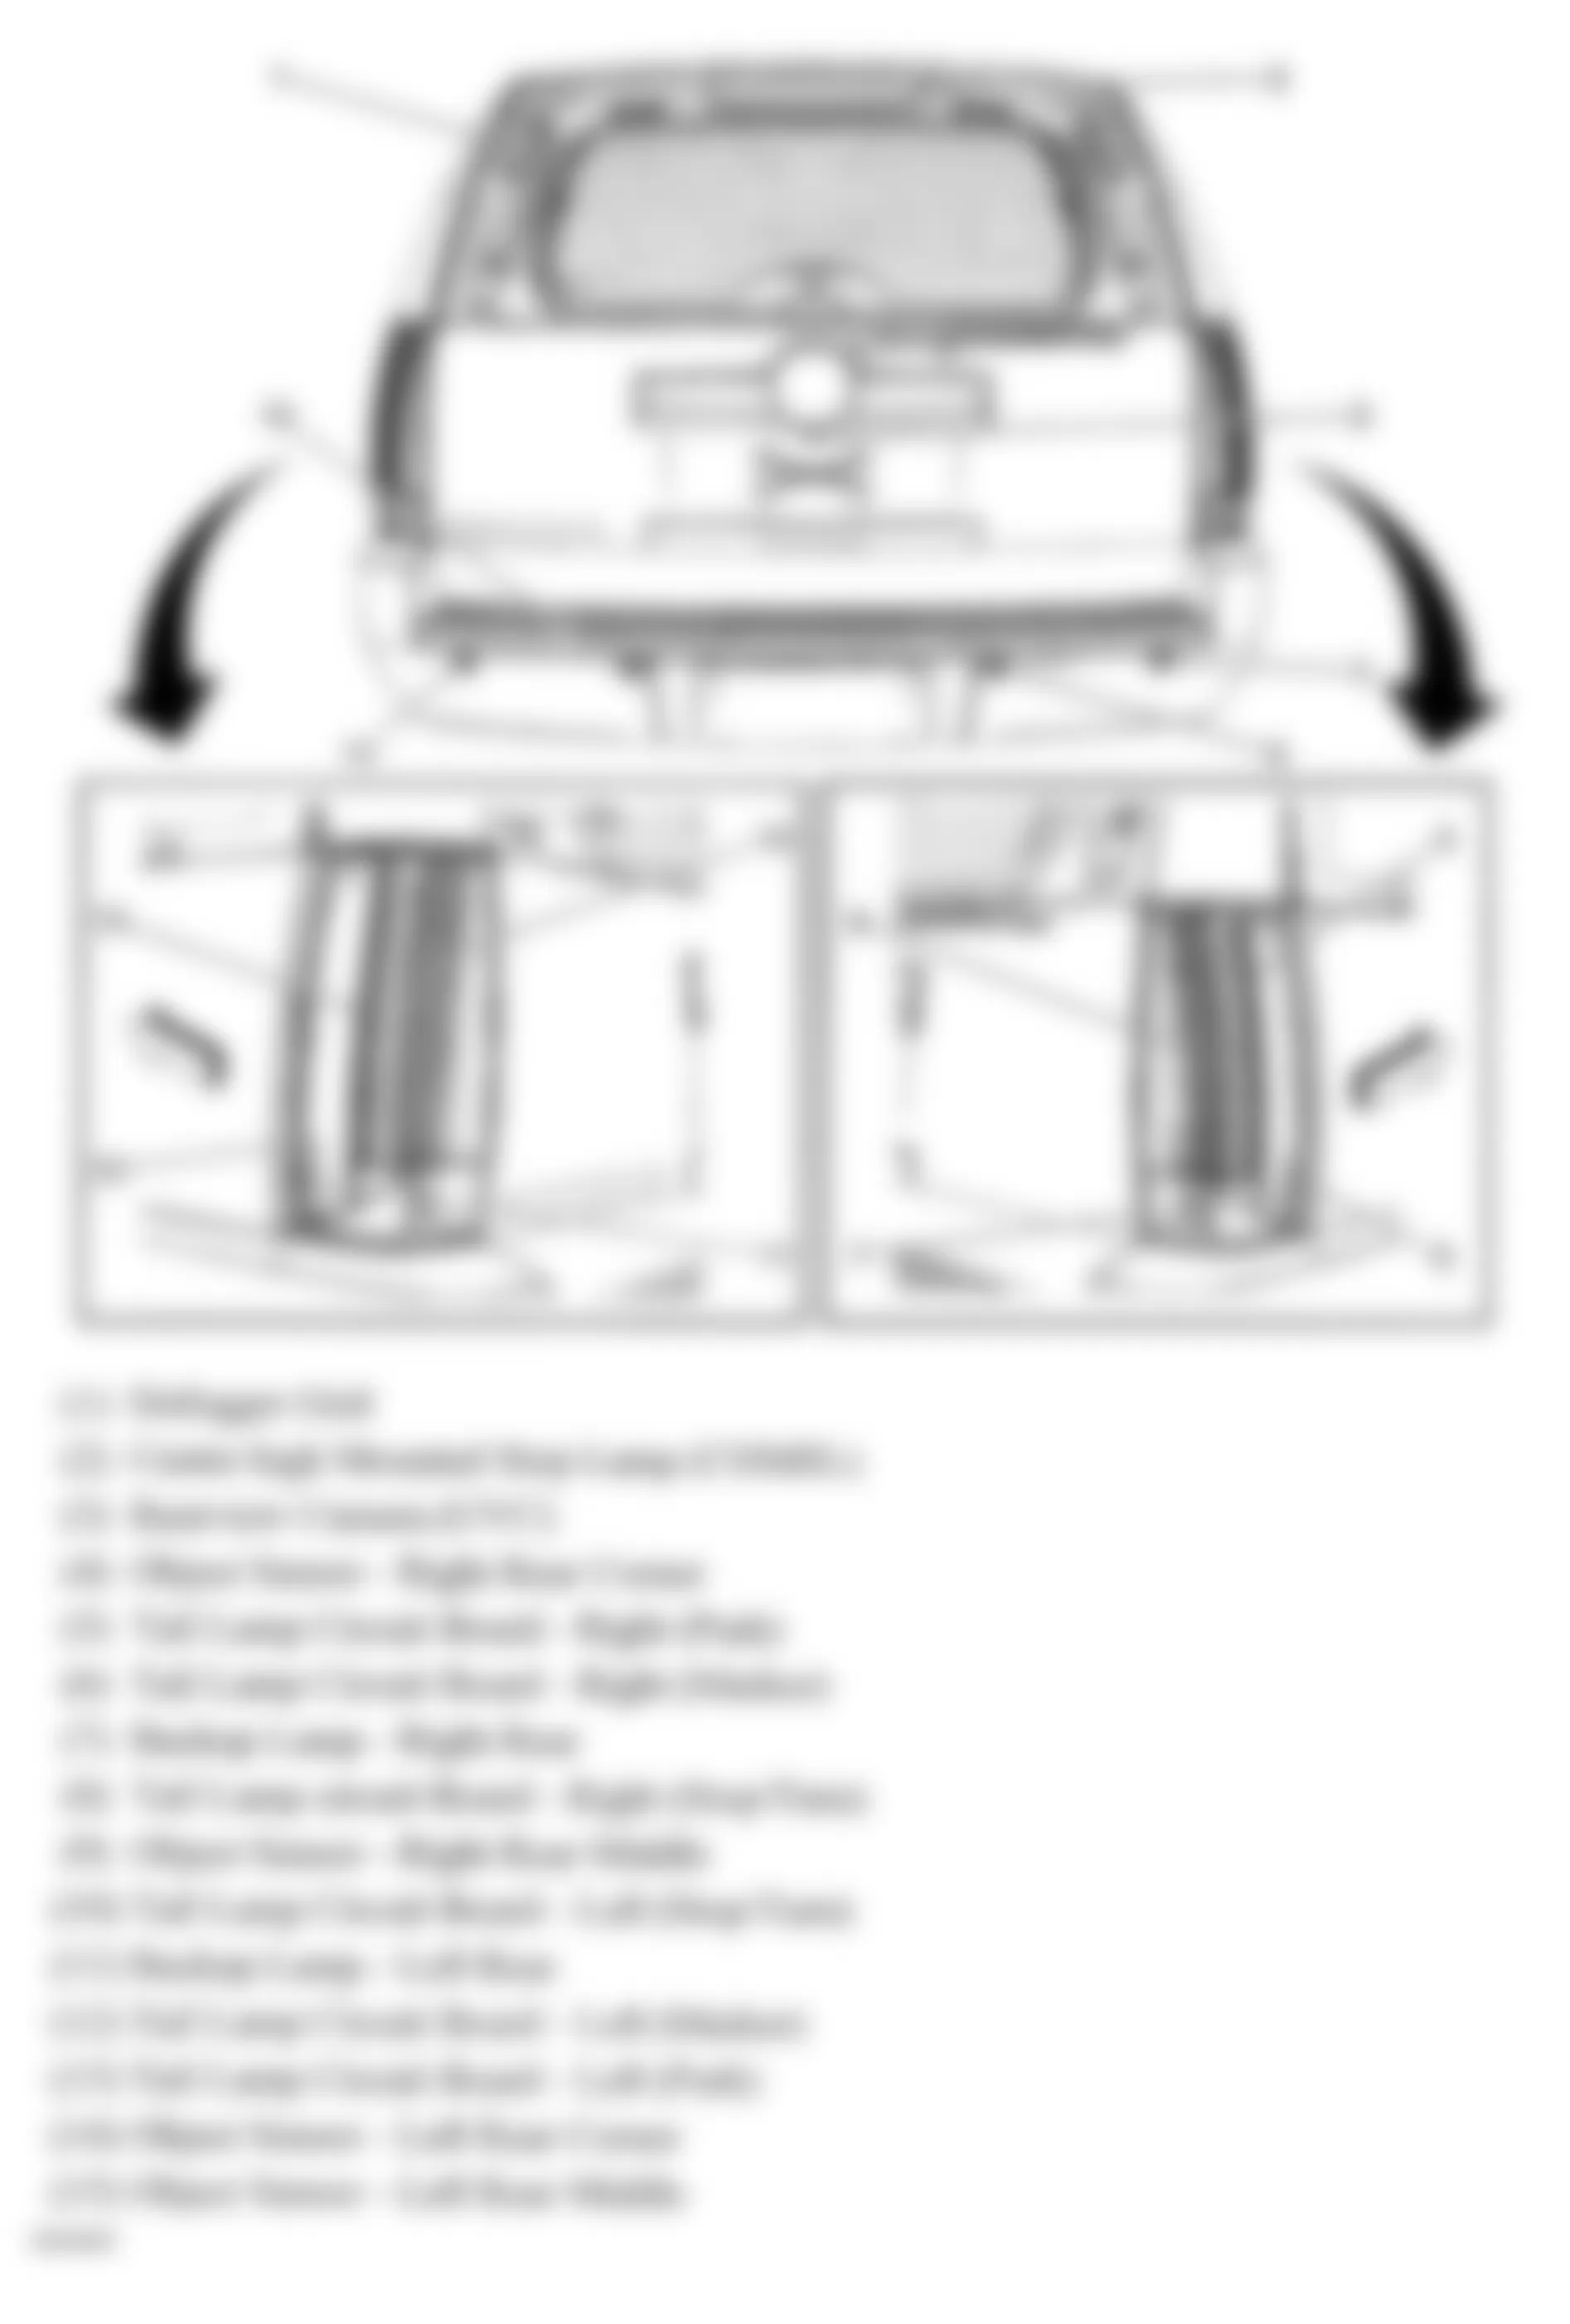 GMC Yukon Hybrid Denali 2010 - Component Locations -  Rear Of Vehicle (Tahoe & Escalade W/One Piece Liftgate)